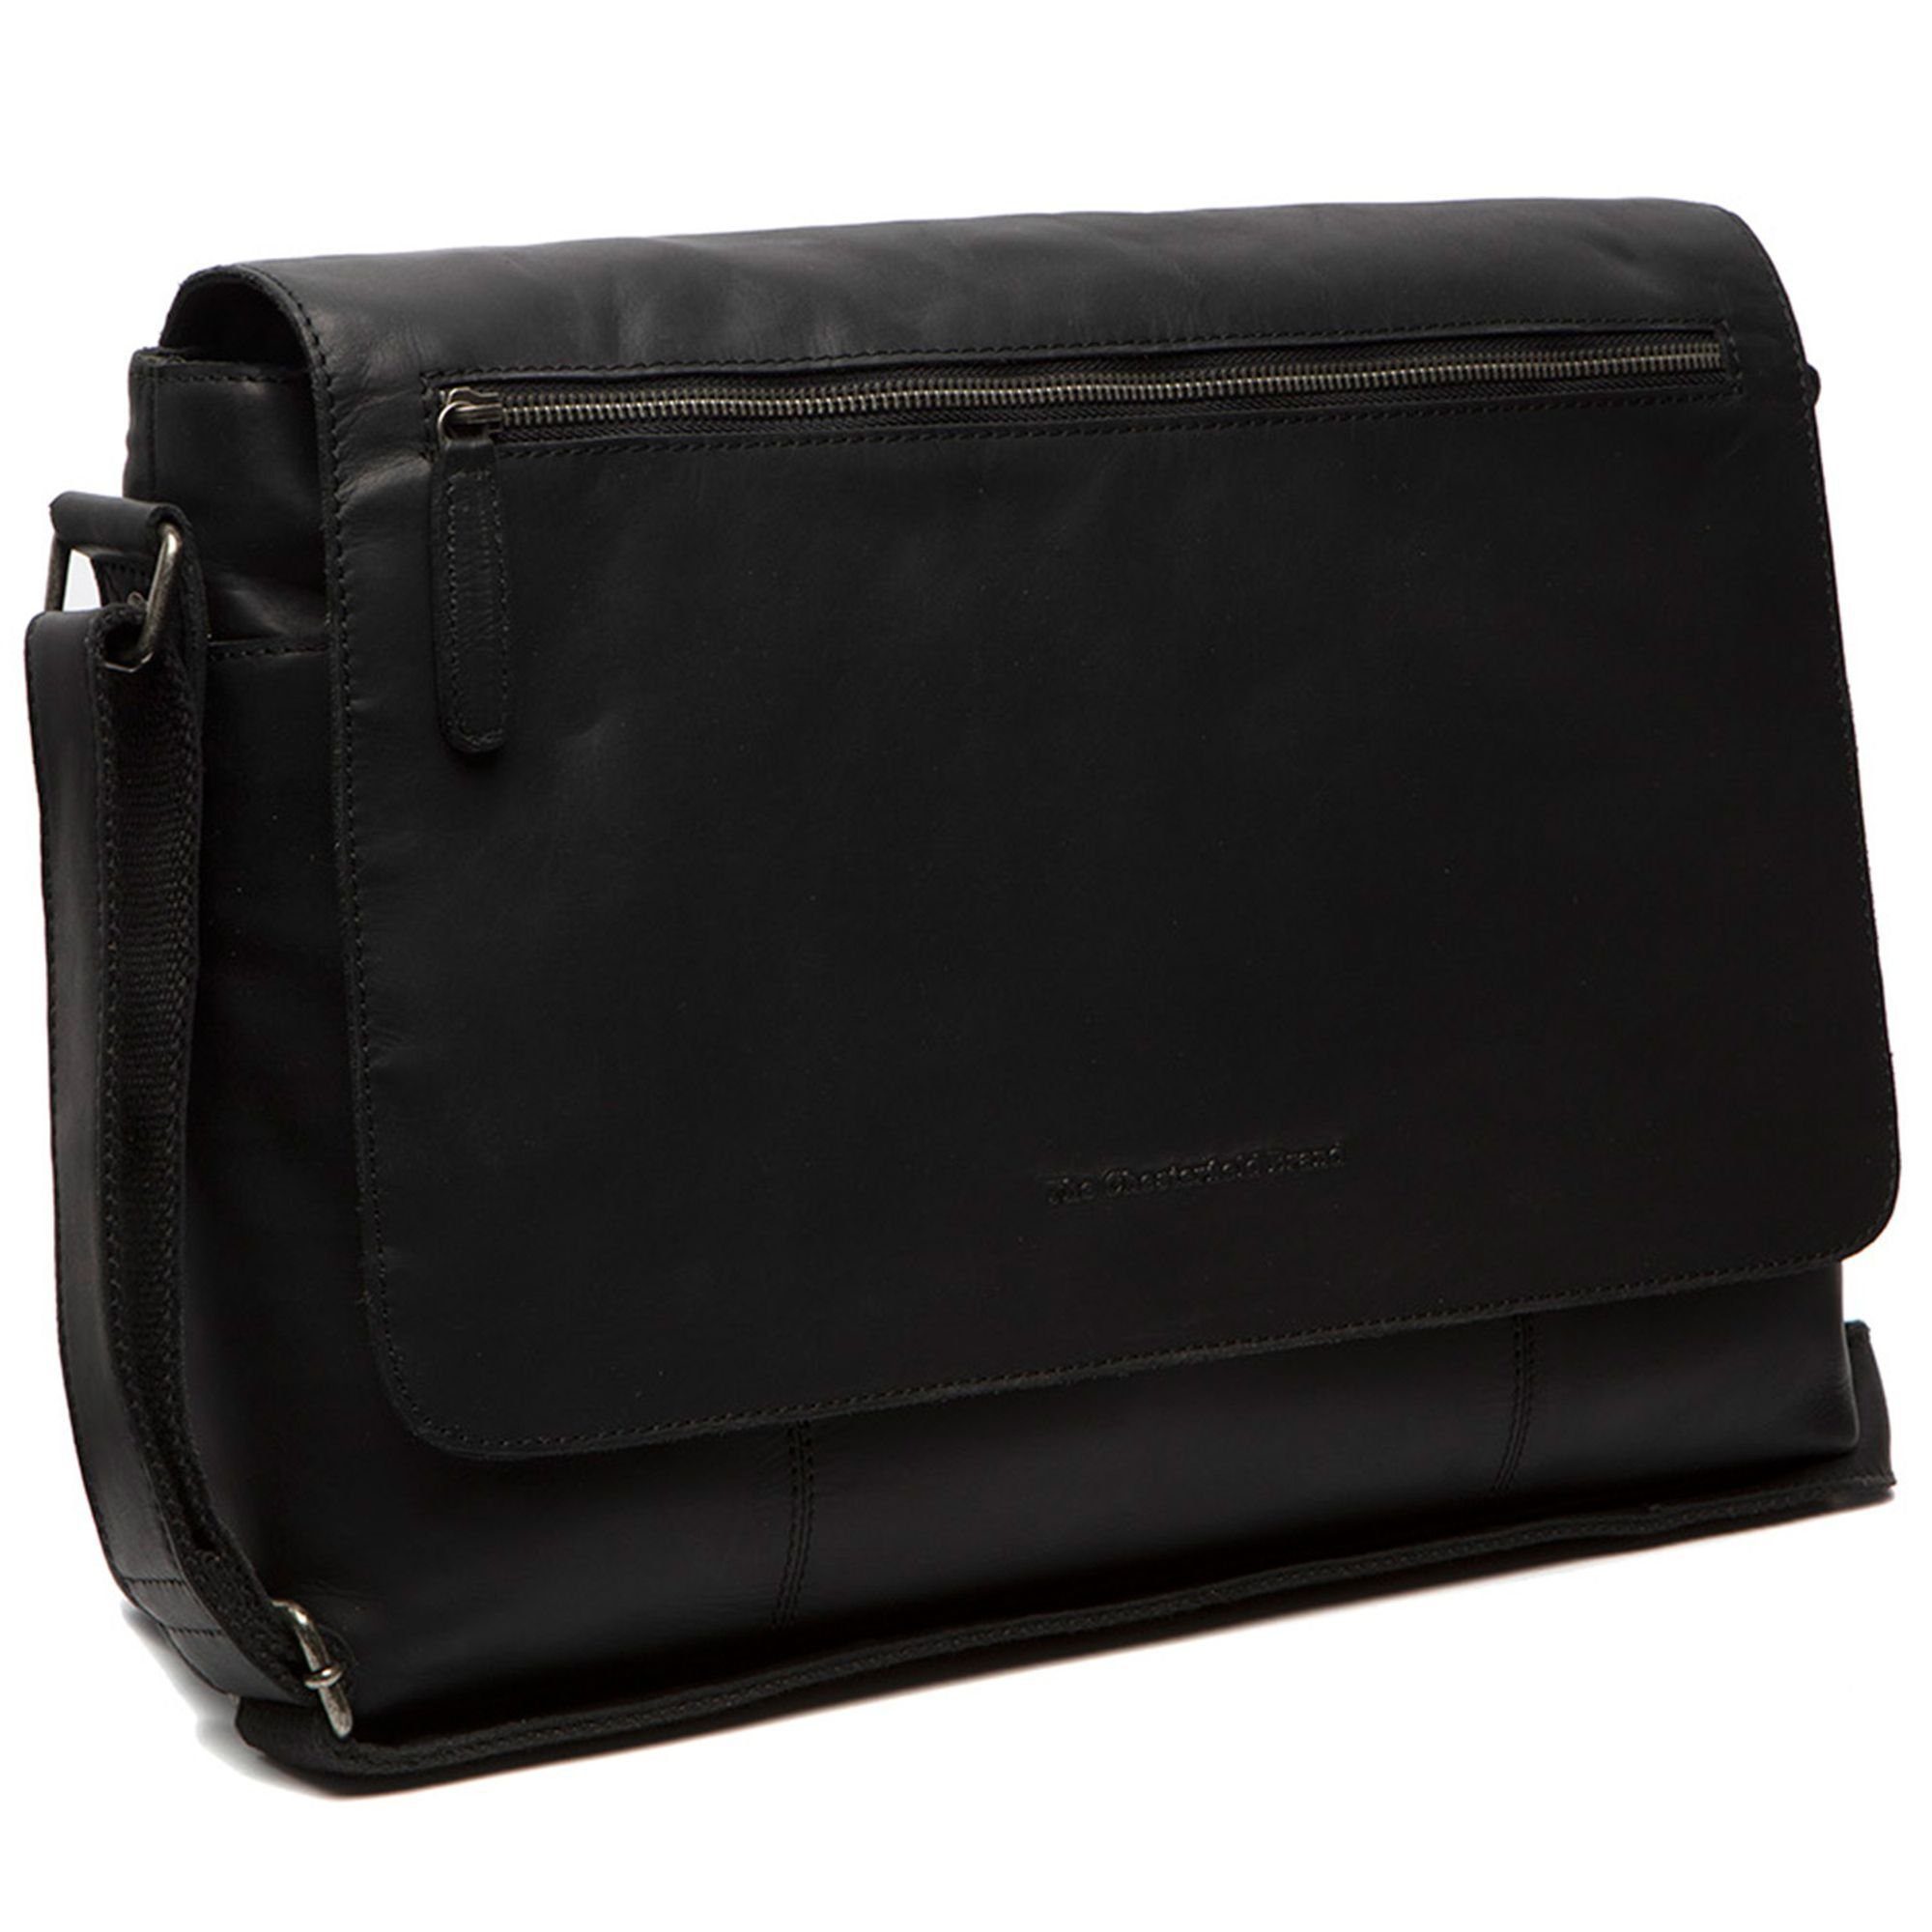 The Chesterfield Brand Messenger Bag Toledo, Leder black | Handtaschen